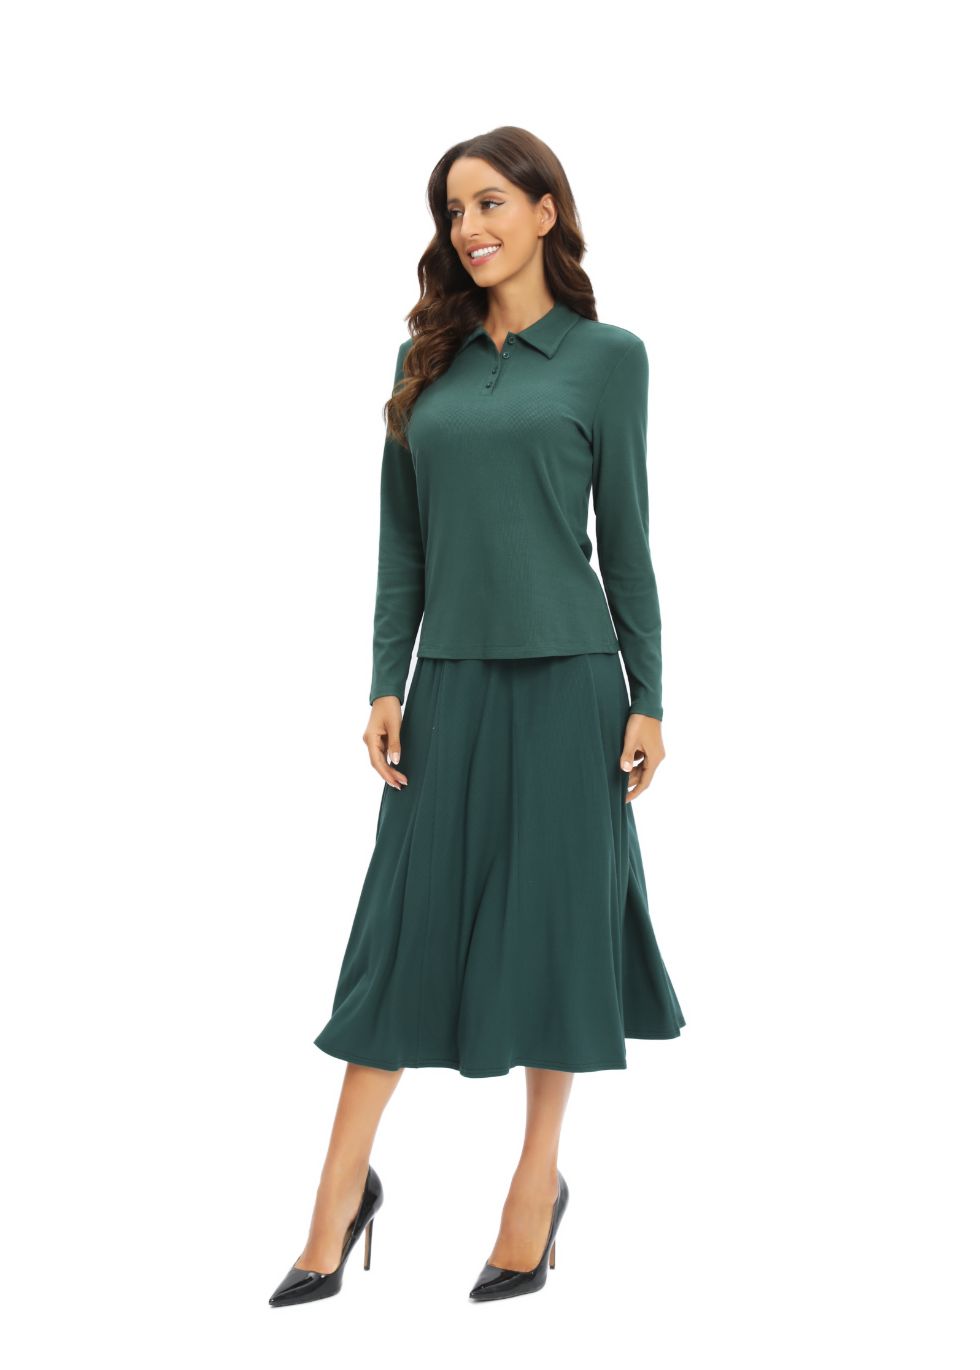 Green Jersey Polo Shirt and Matching Skirt Set